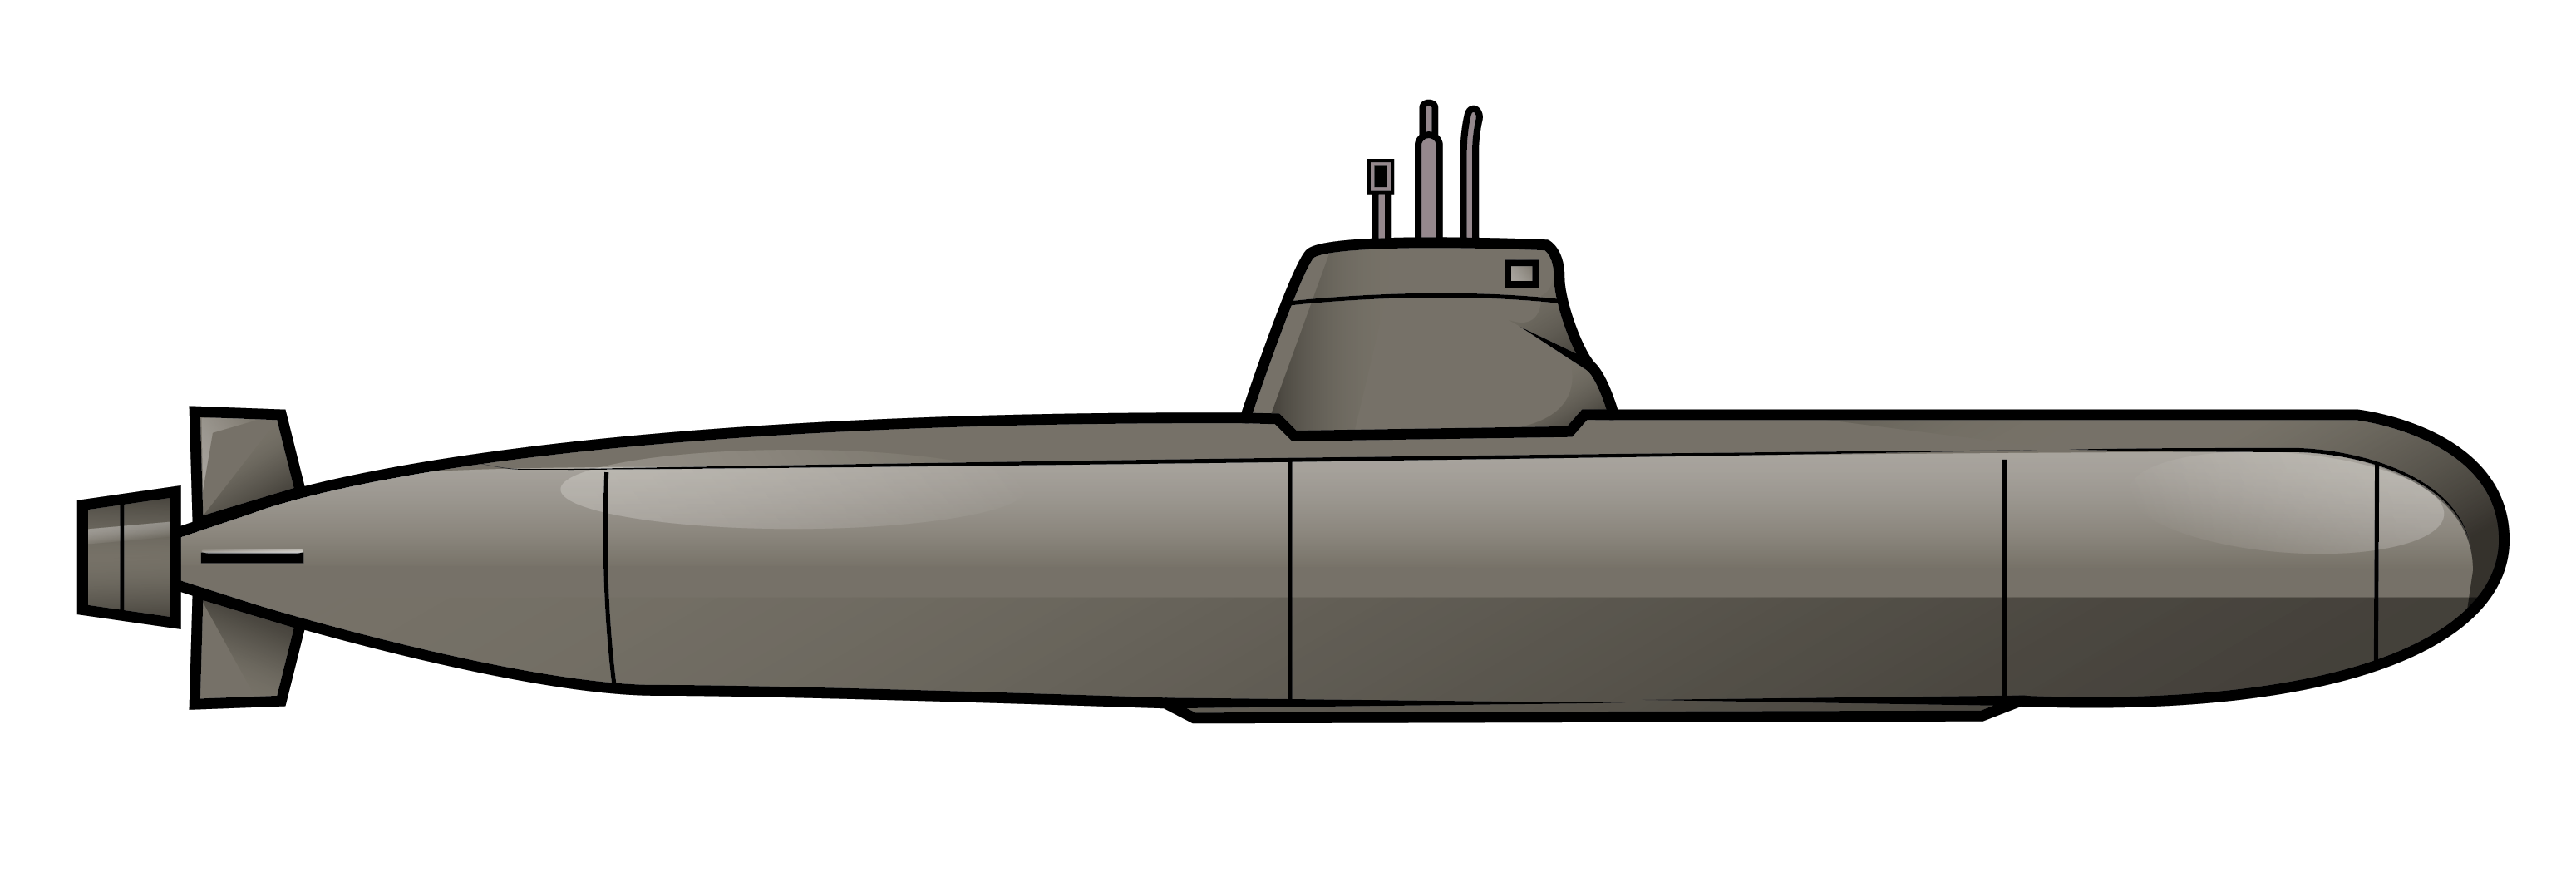 Submarine Clipart Free